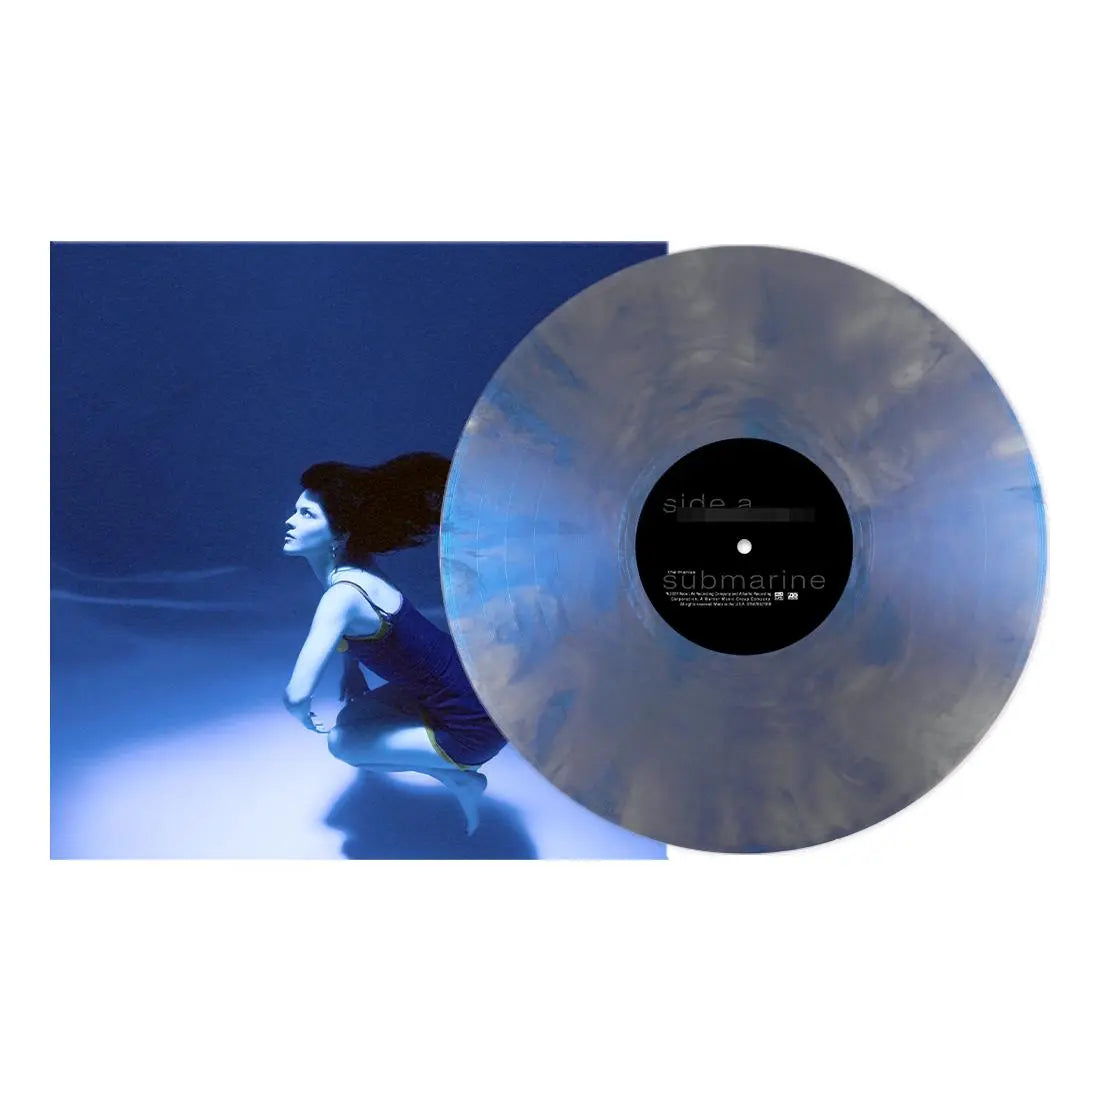 Drowned World Records - Submarine [Iridescent Blue Vinyl]